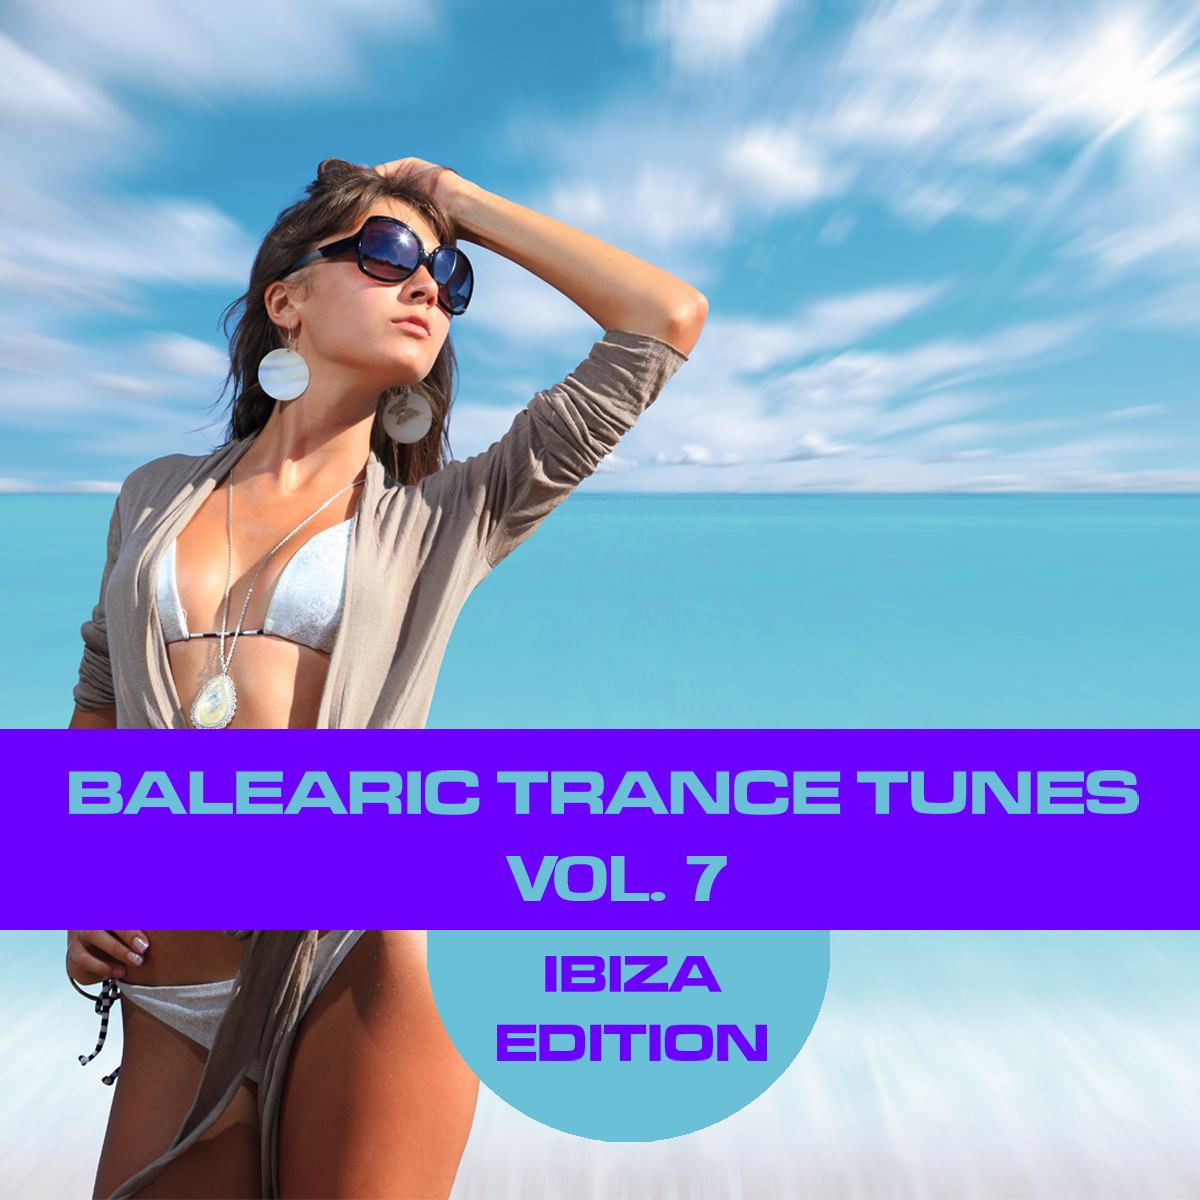 Balearic Trance Tunes Vol. 7 - Ibiza Edition